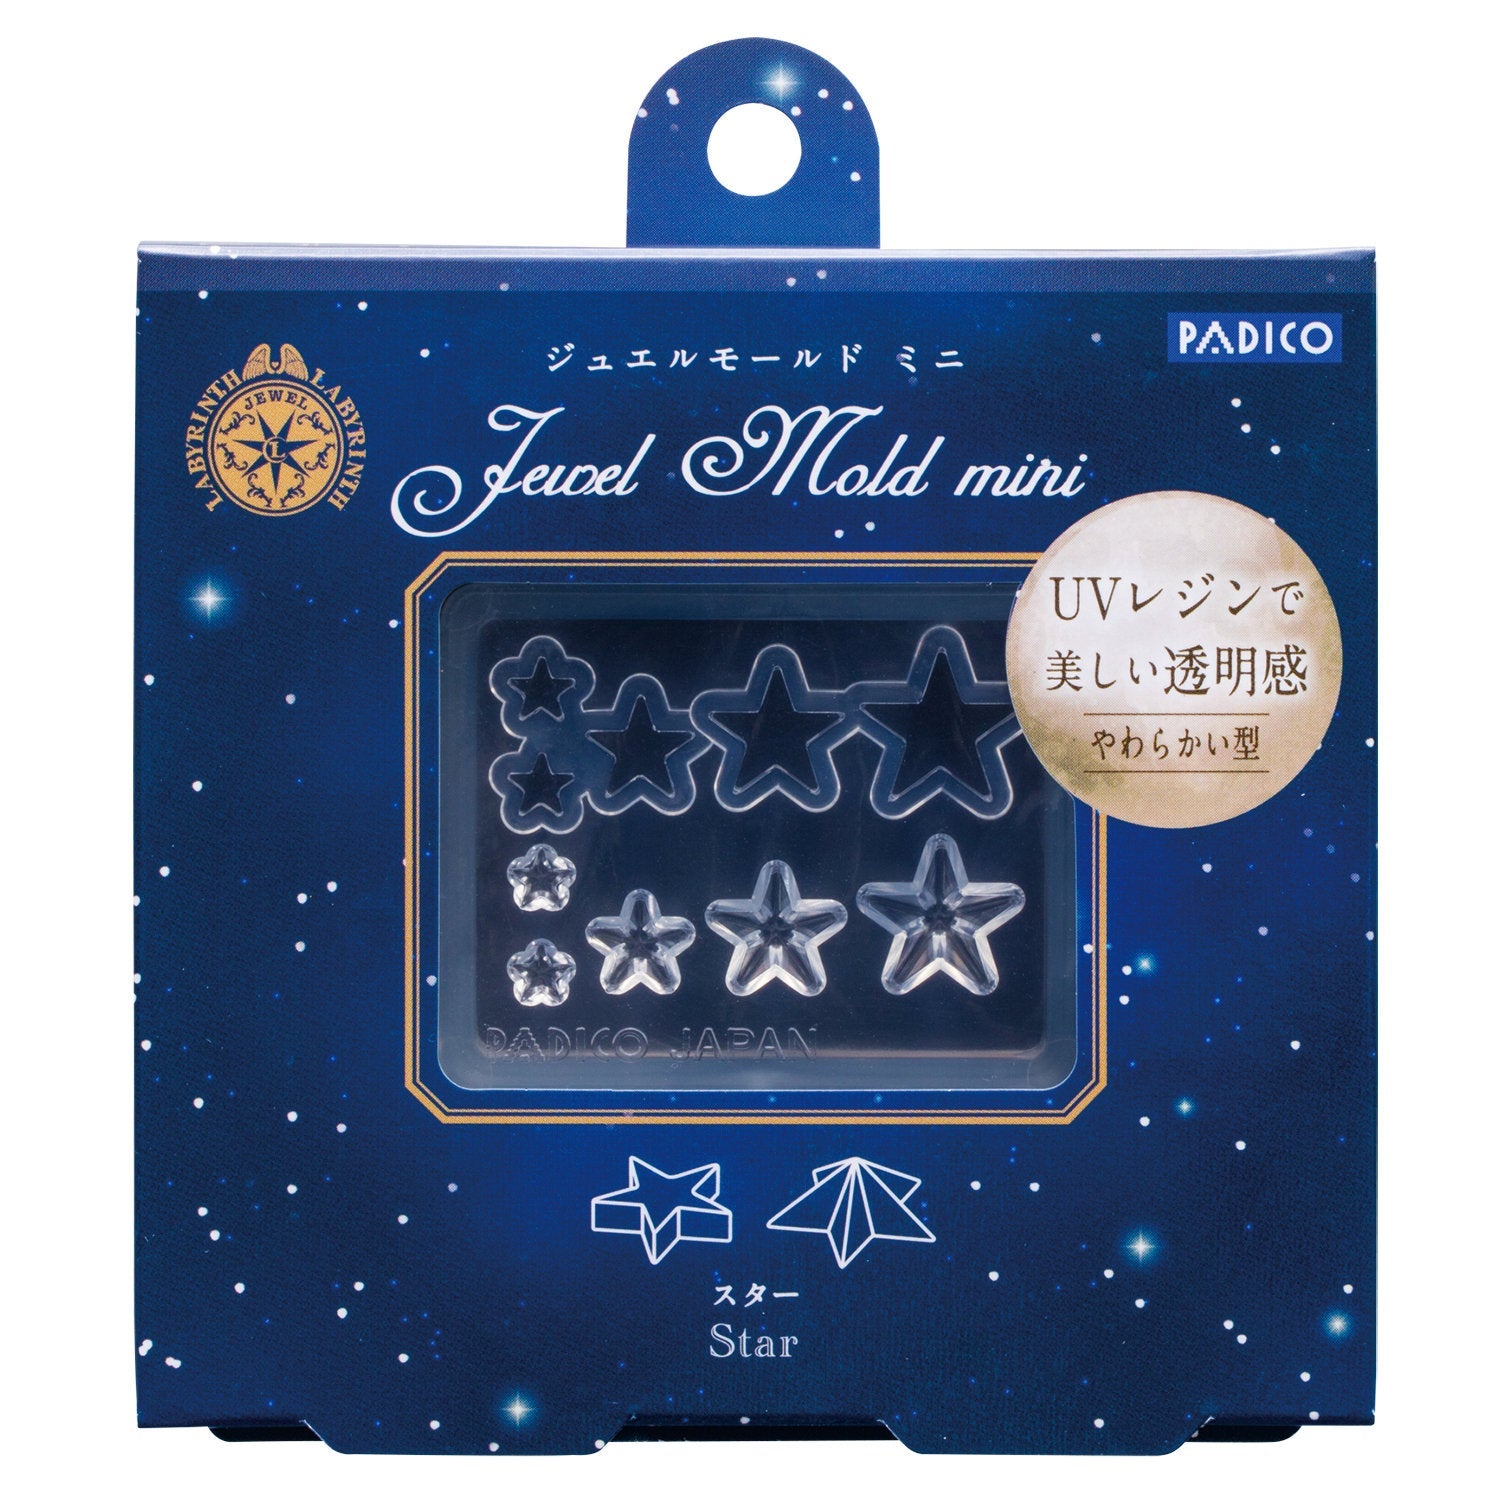 Padico Resin Jewel Mold Mini - Stars